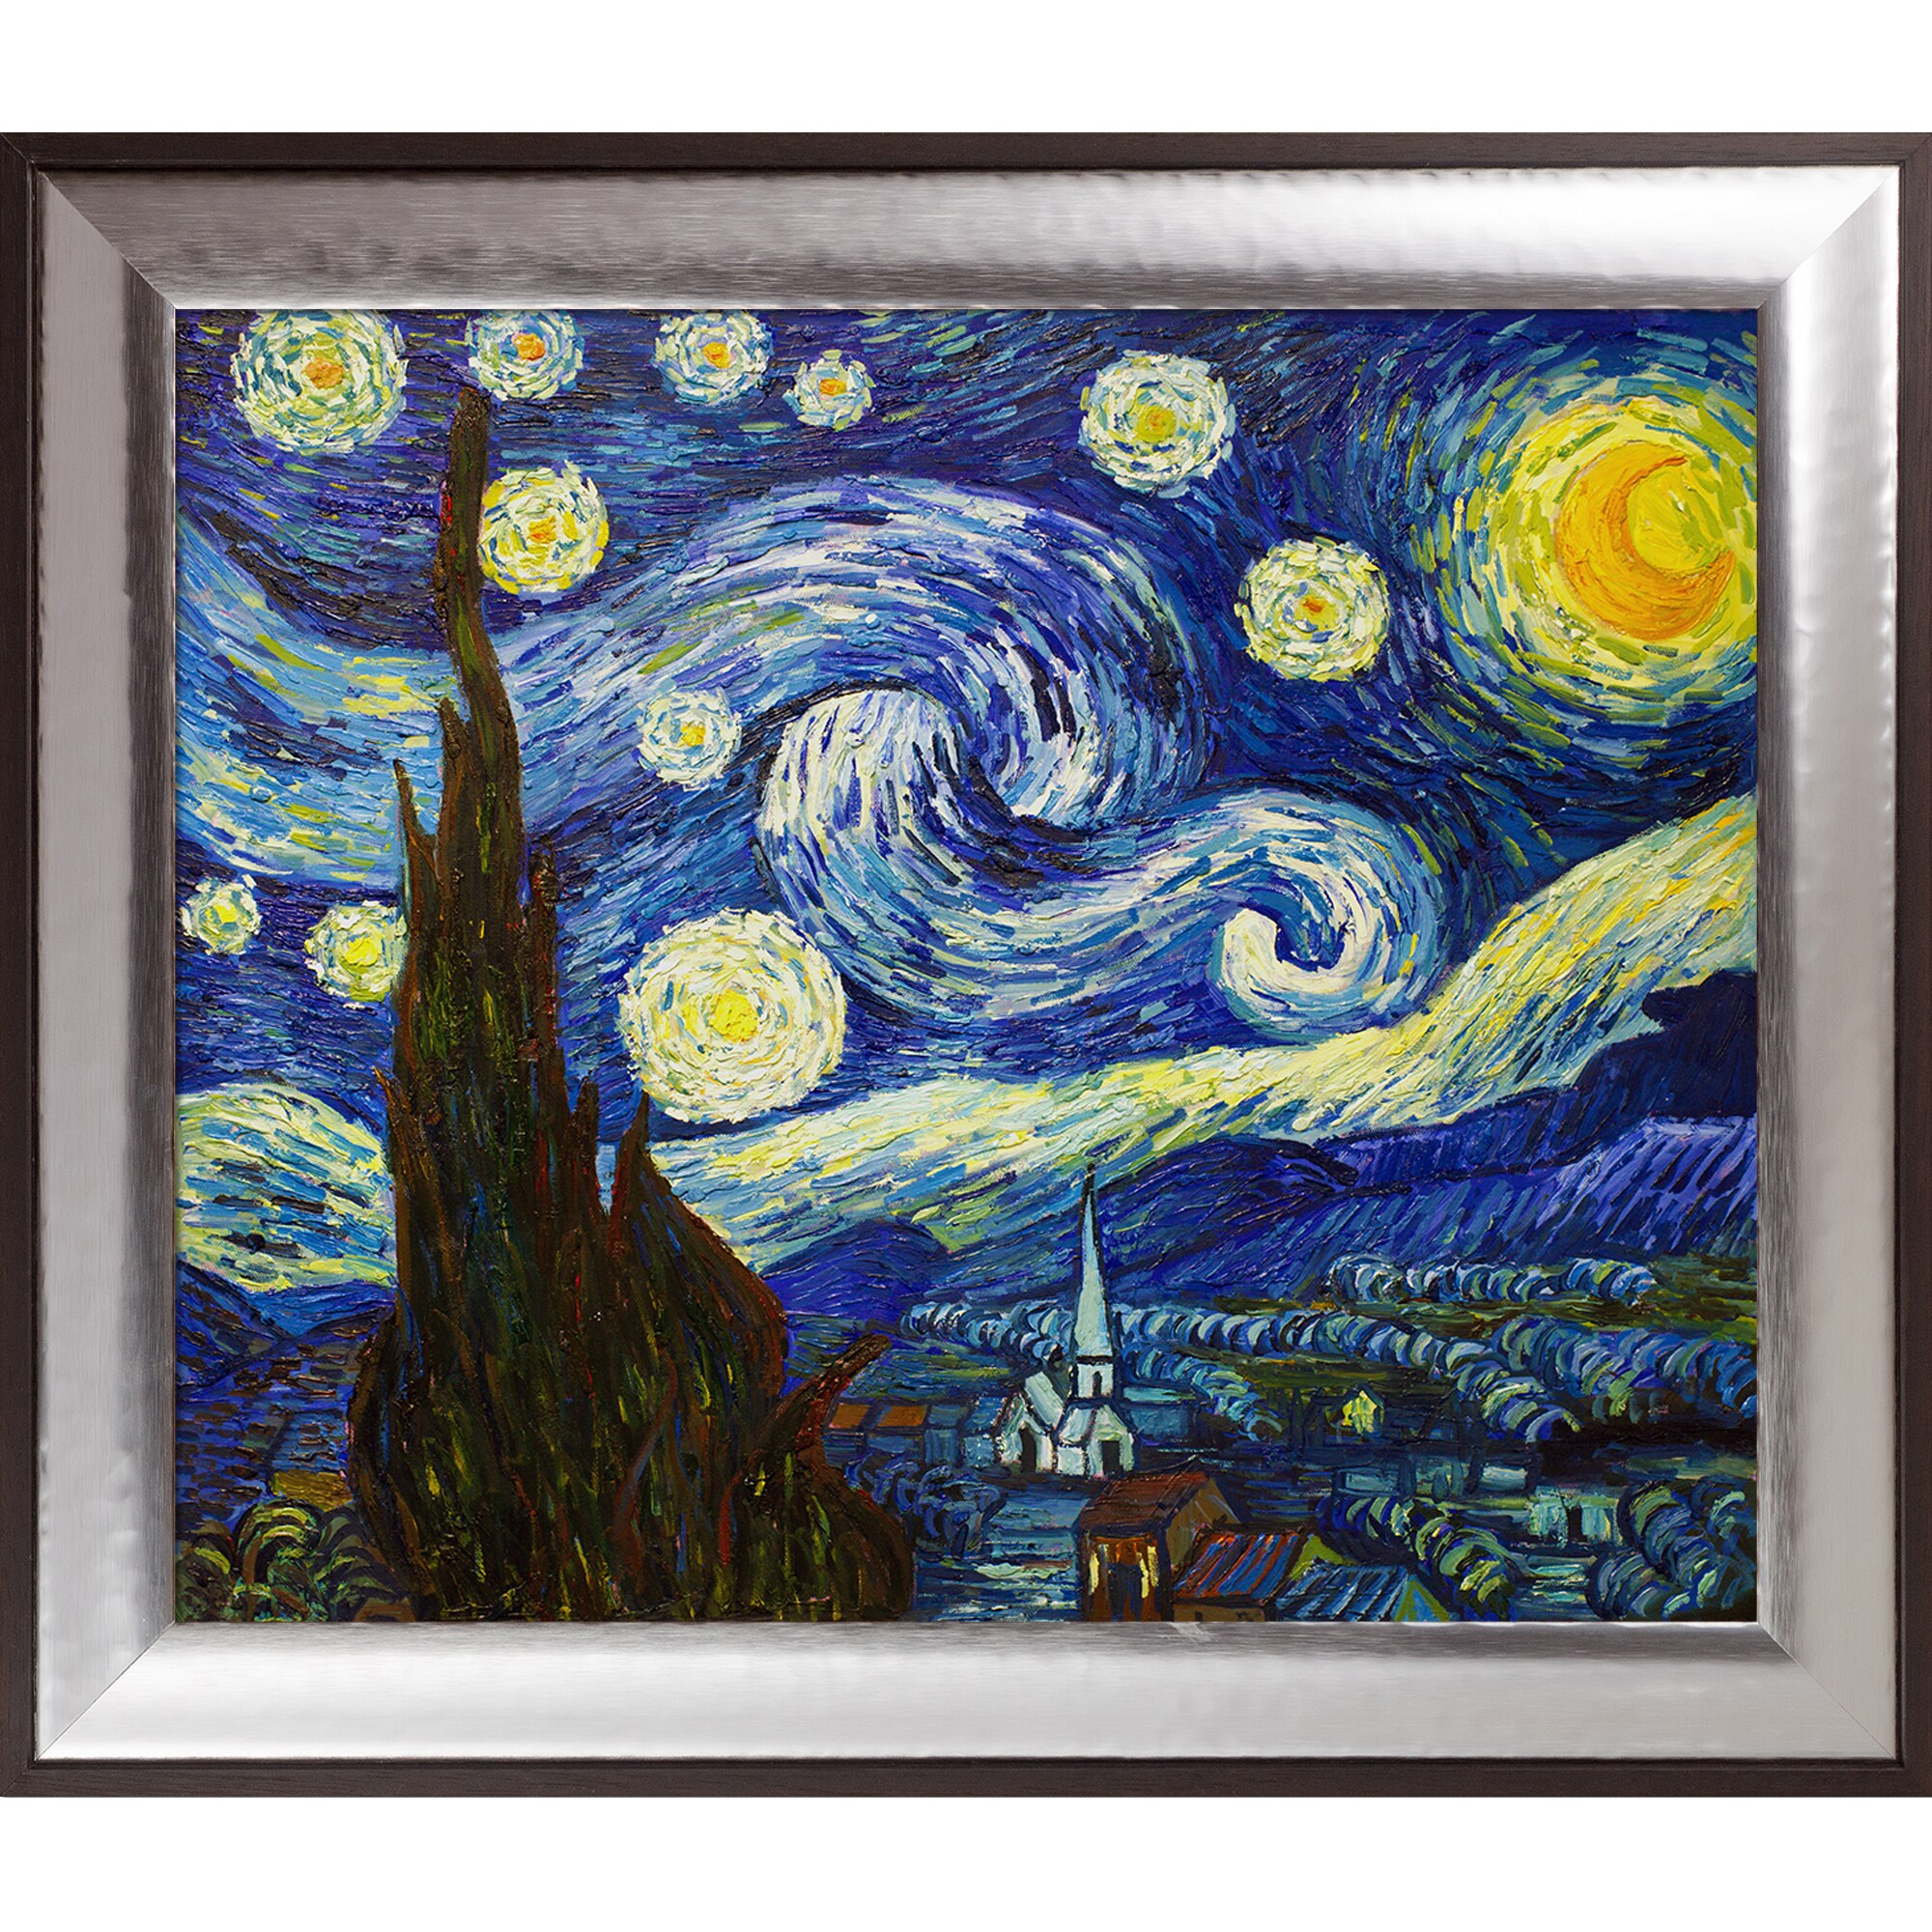 La Pastiche Vincent Van Gogh Framed Hand Painted Oil on Canvas 29.25 x 25.25